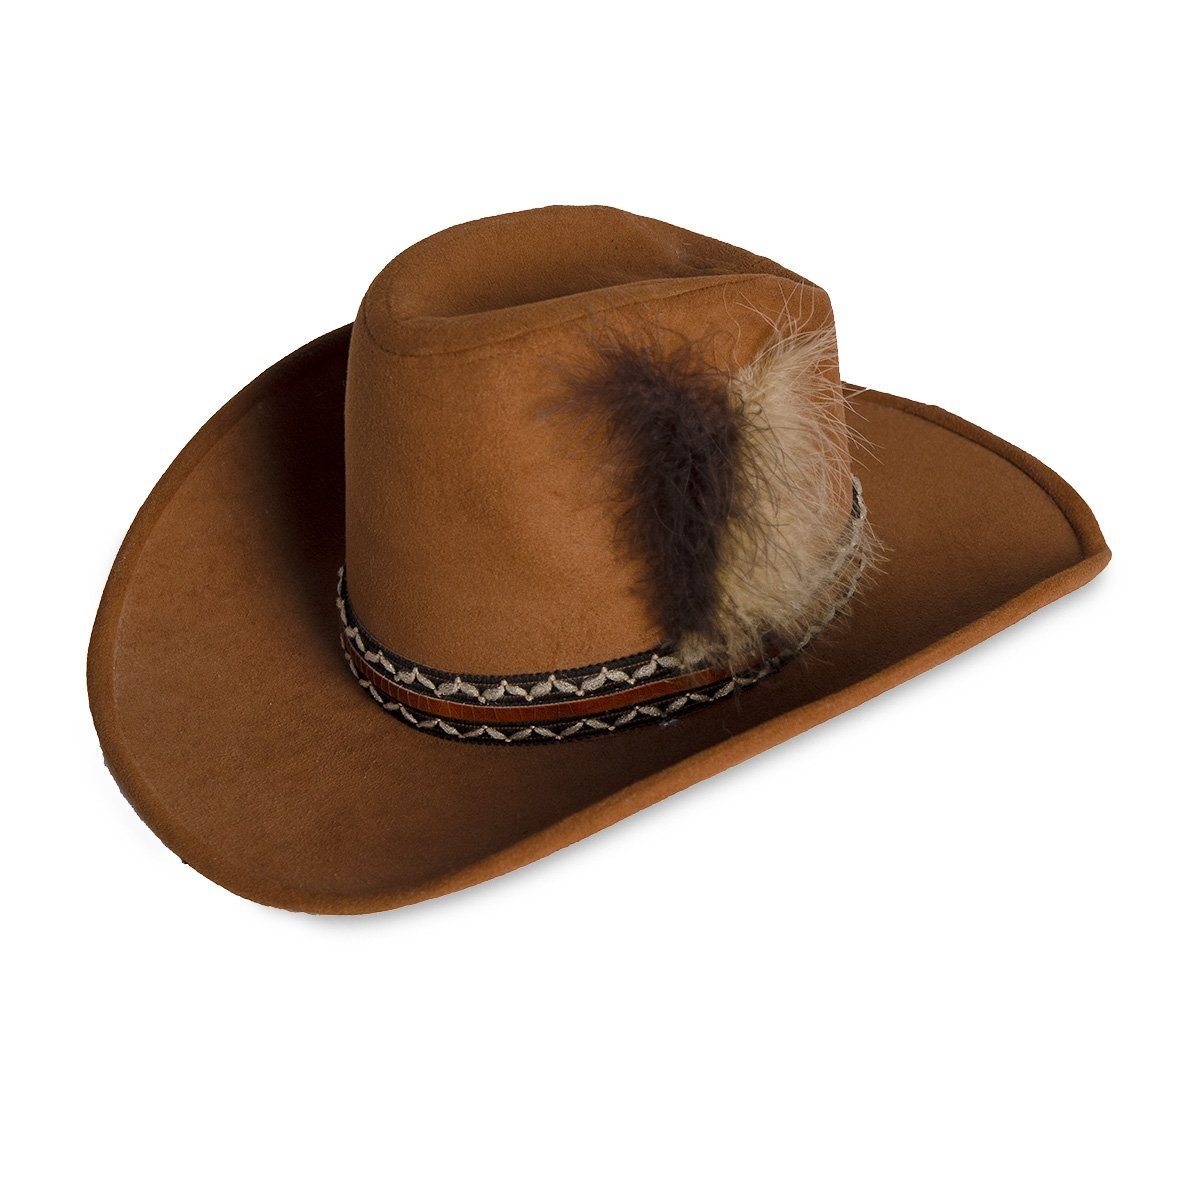 Vintage Cowboy Hat, Dark Tan Wool Felt, Feathers